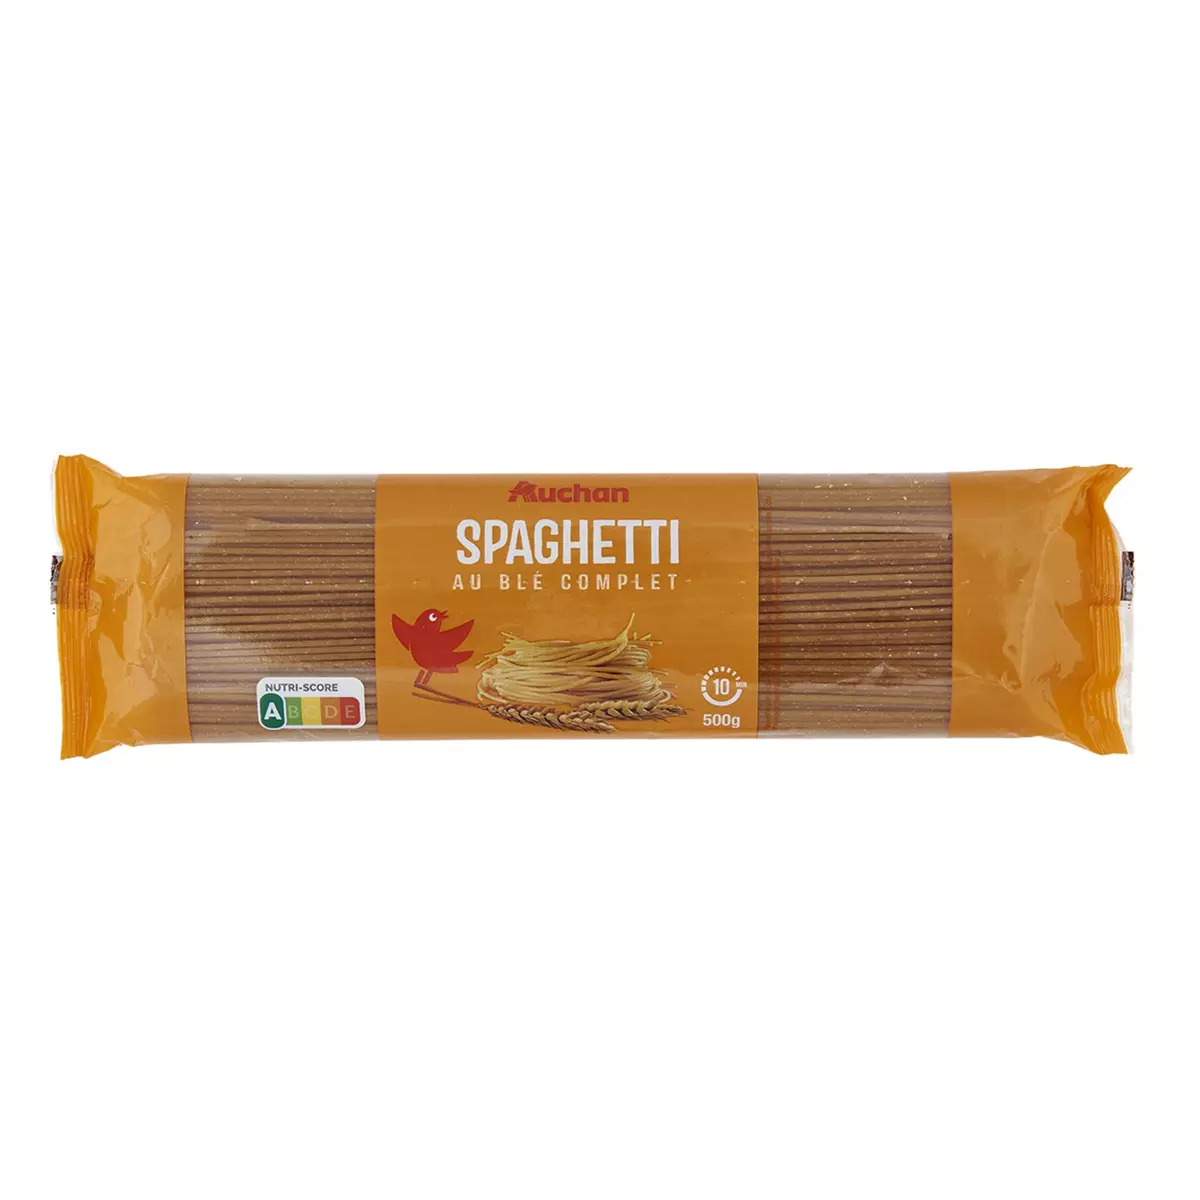 AUCHAN Spaghetti au blé complet 500g